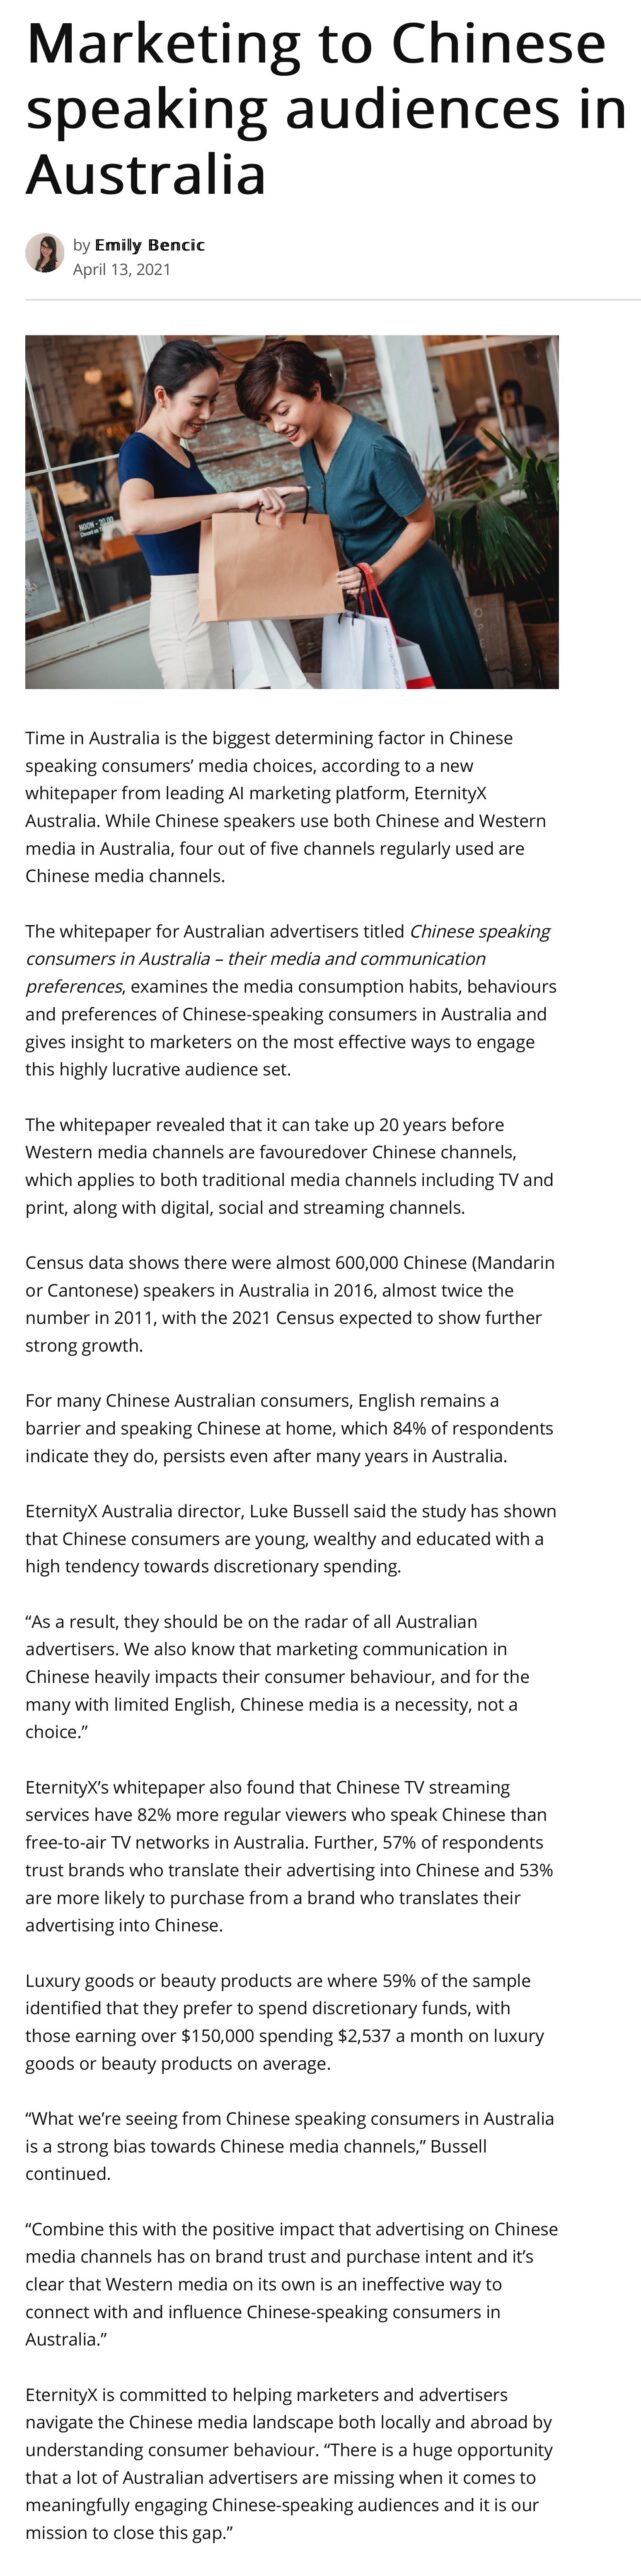 Retailbiz Article on Preferences of Chinese Australian